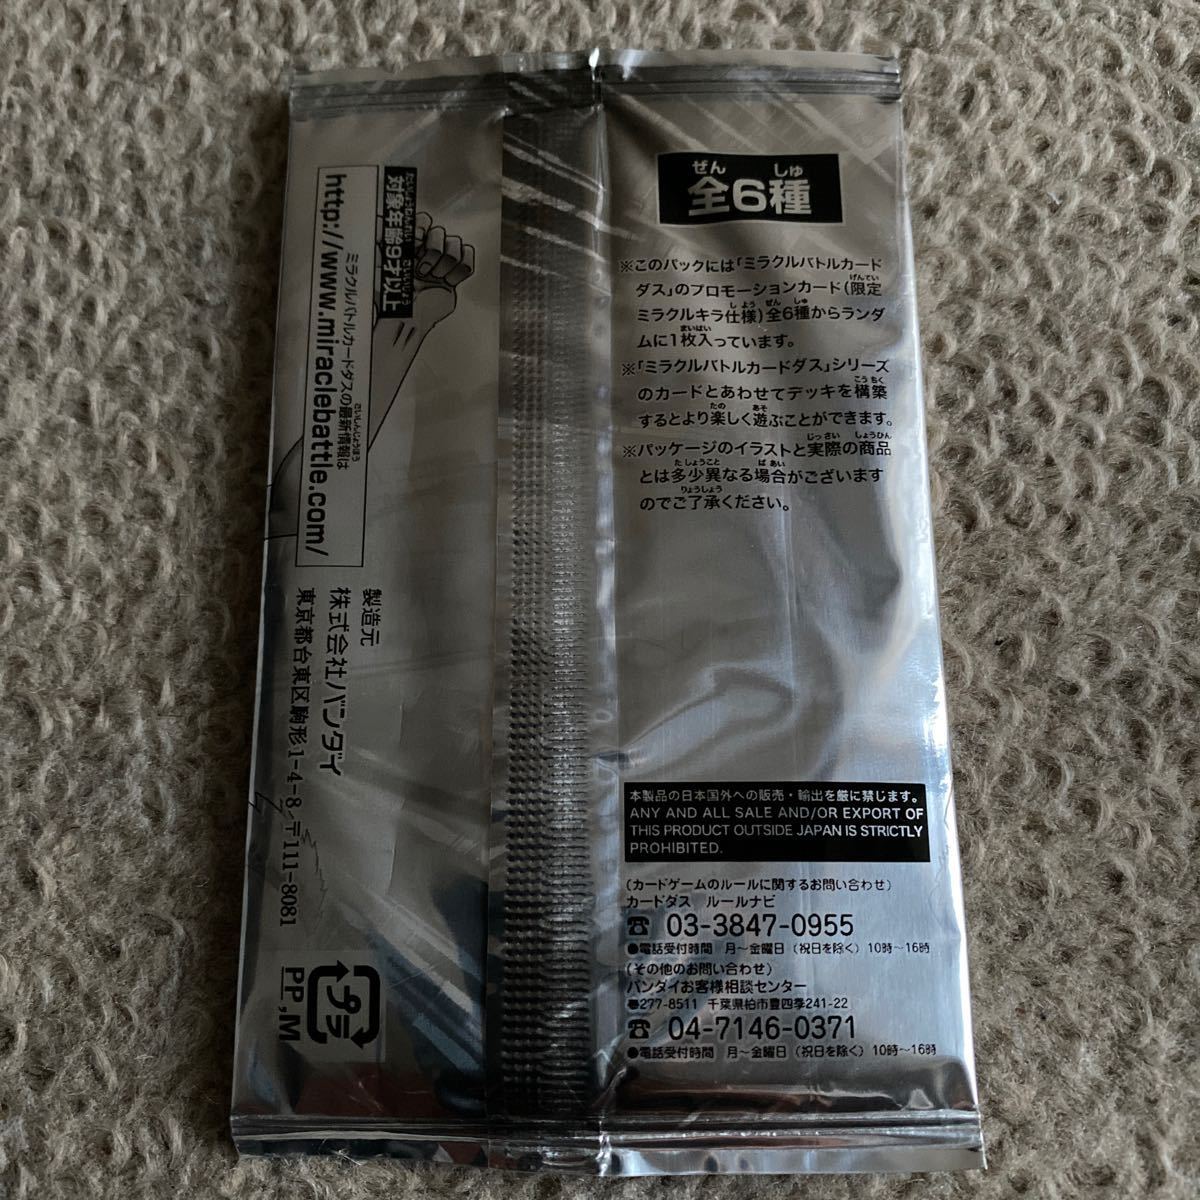  Dragon Ball модифицировано One-piece Miracle Battle Carddas ограничение miracle kila карта упаковка промо ONE PIECE